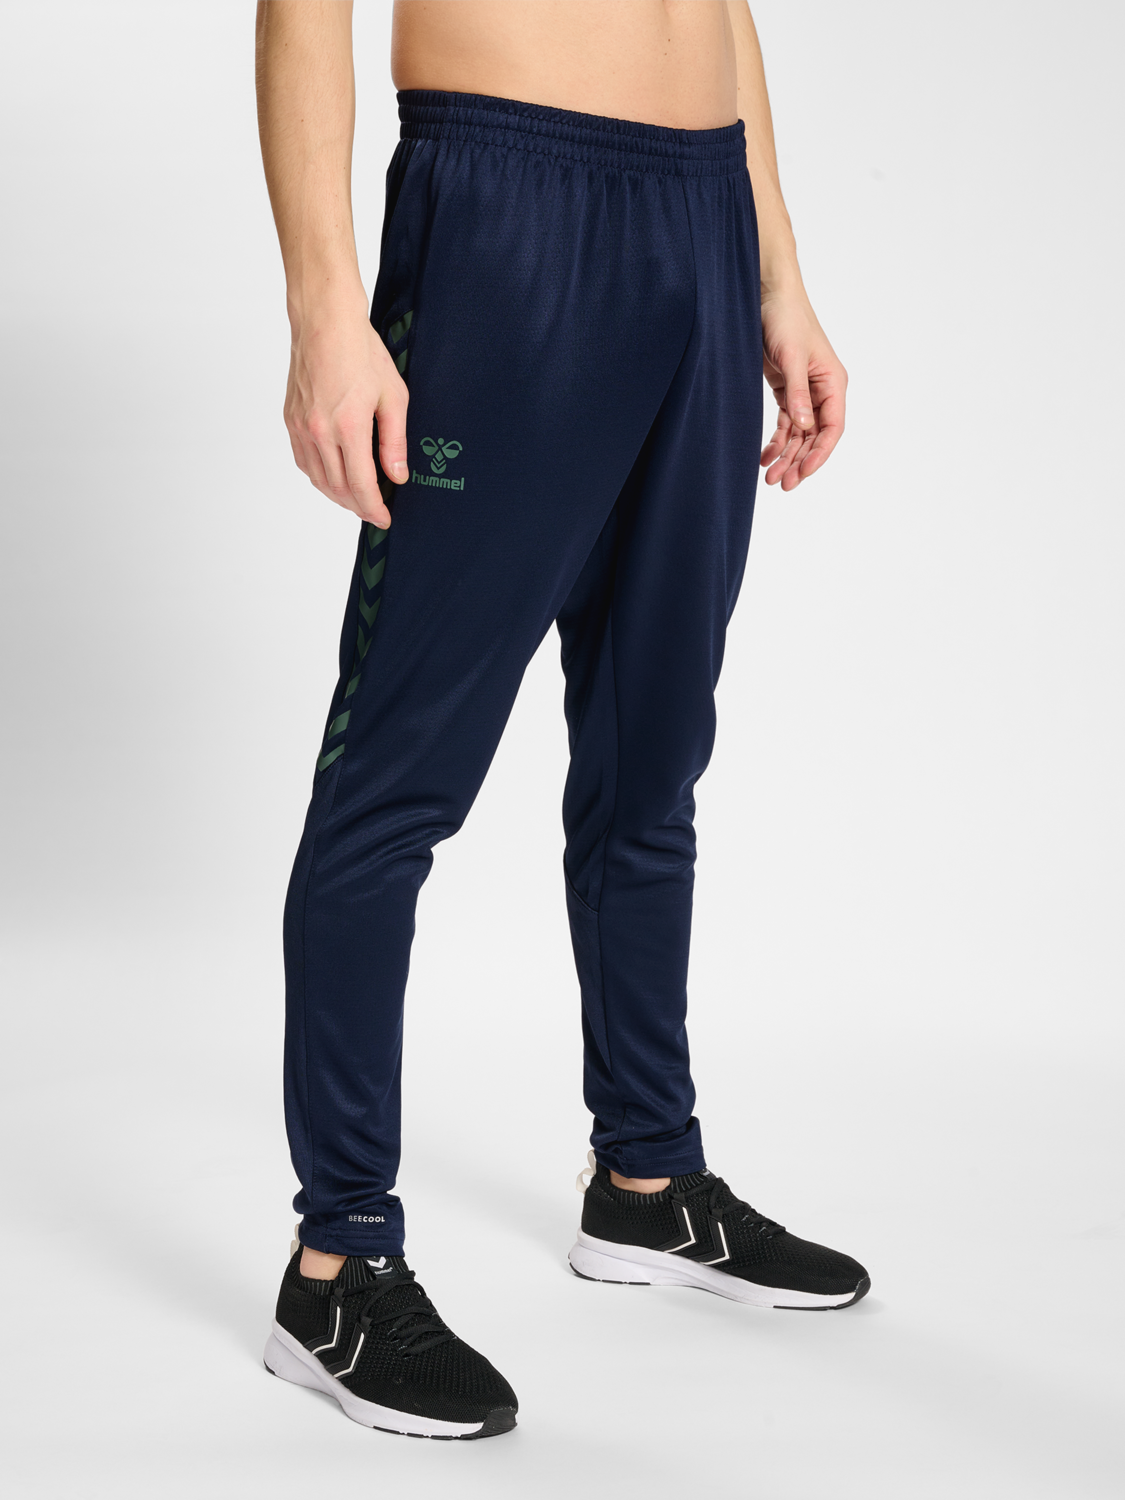 Adidas Men's Tiro 23 Training Pants Track/Soccer Pant Multiple Colors &  Sizes | eBay